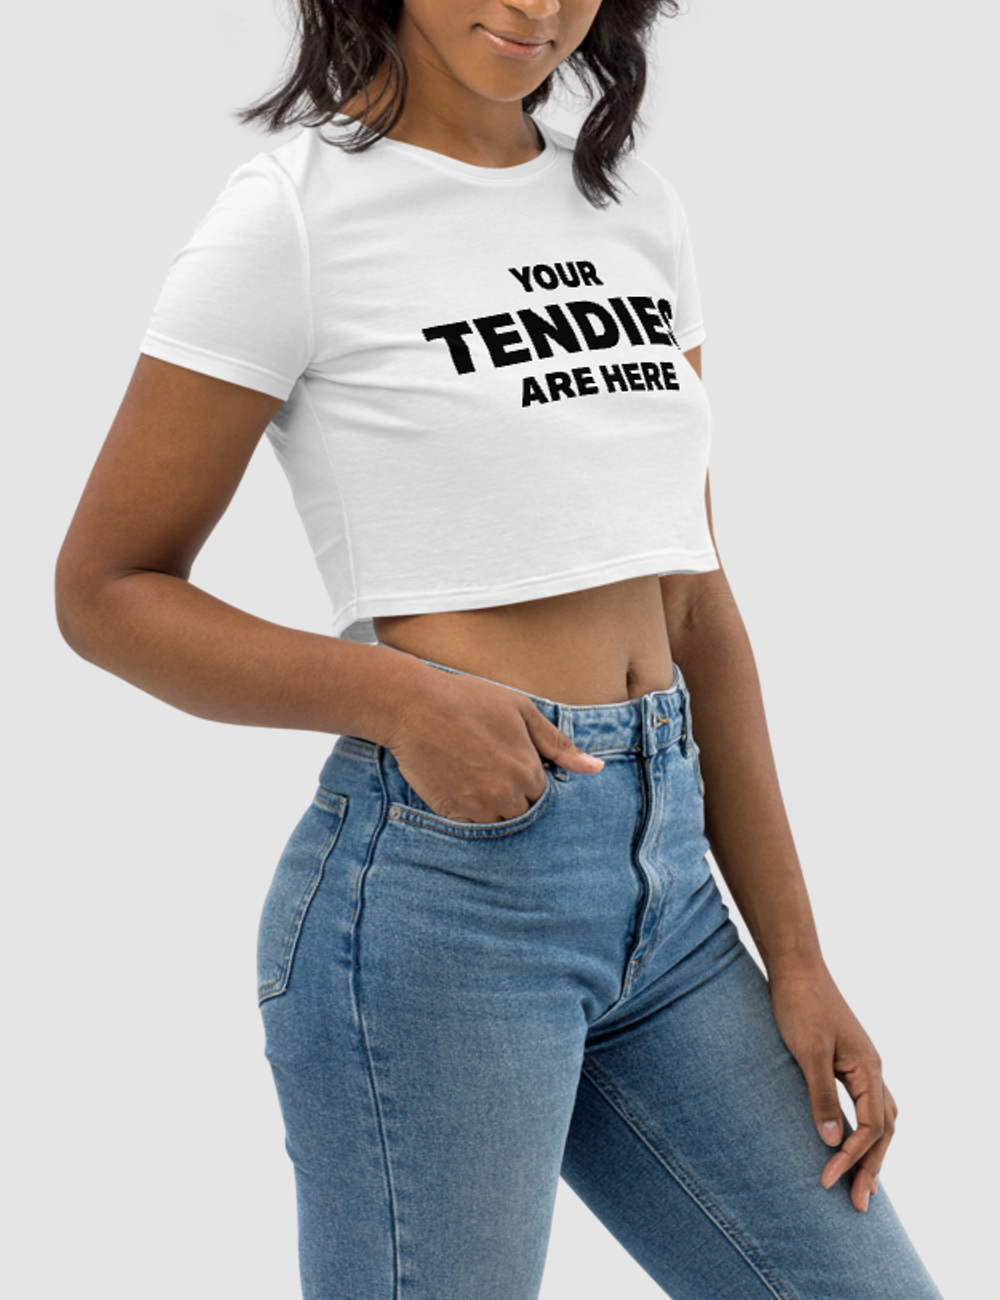 Your Tendies Are Here | Women's Crop Top T-Shirt OniTakai